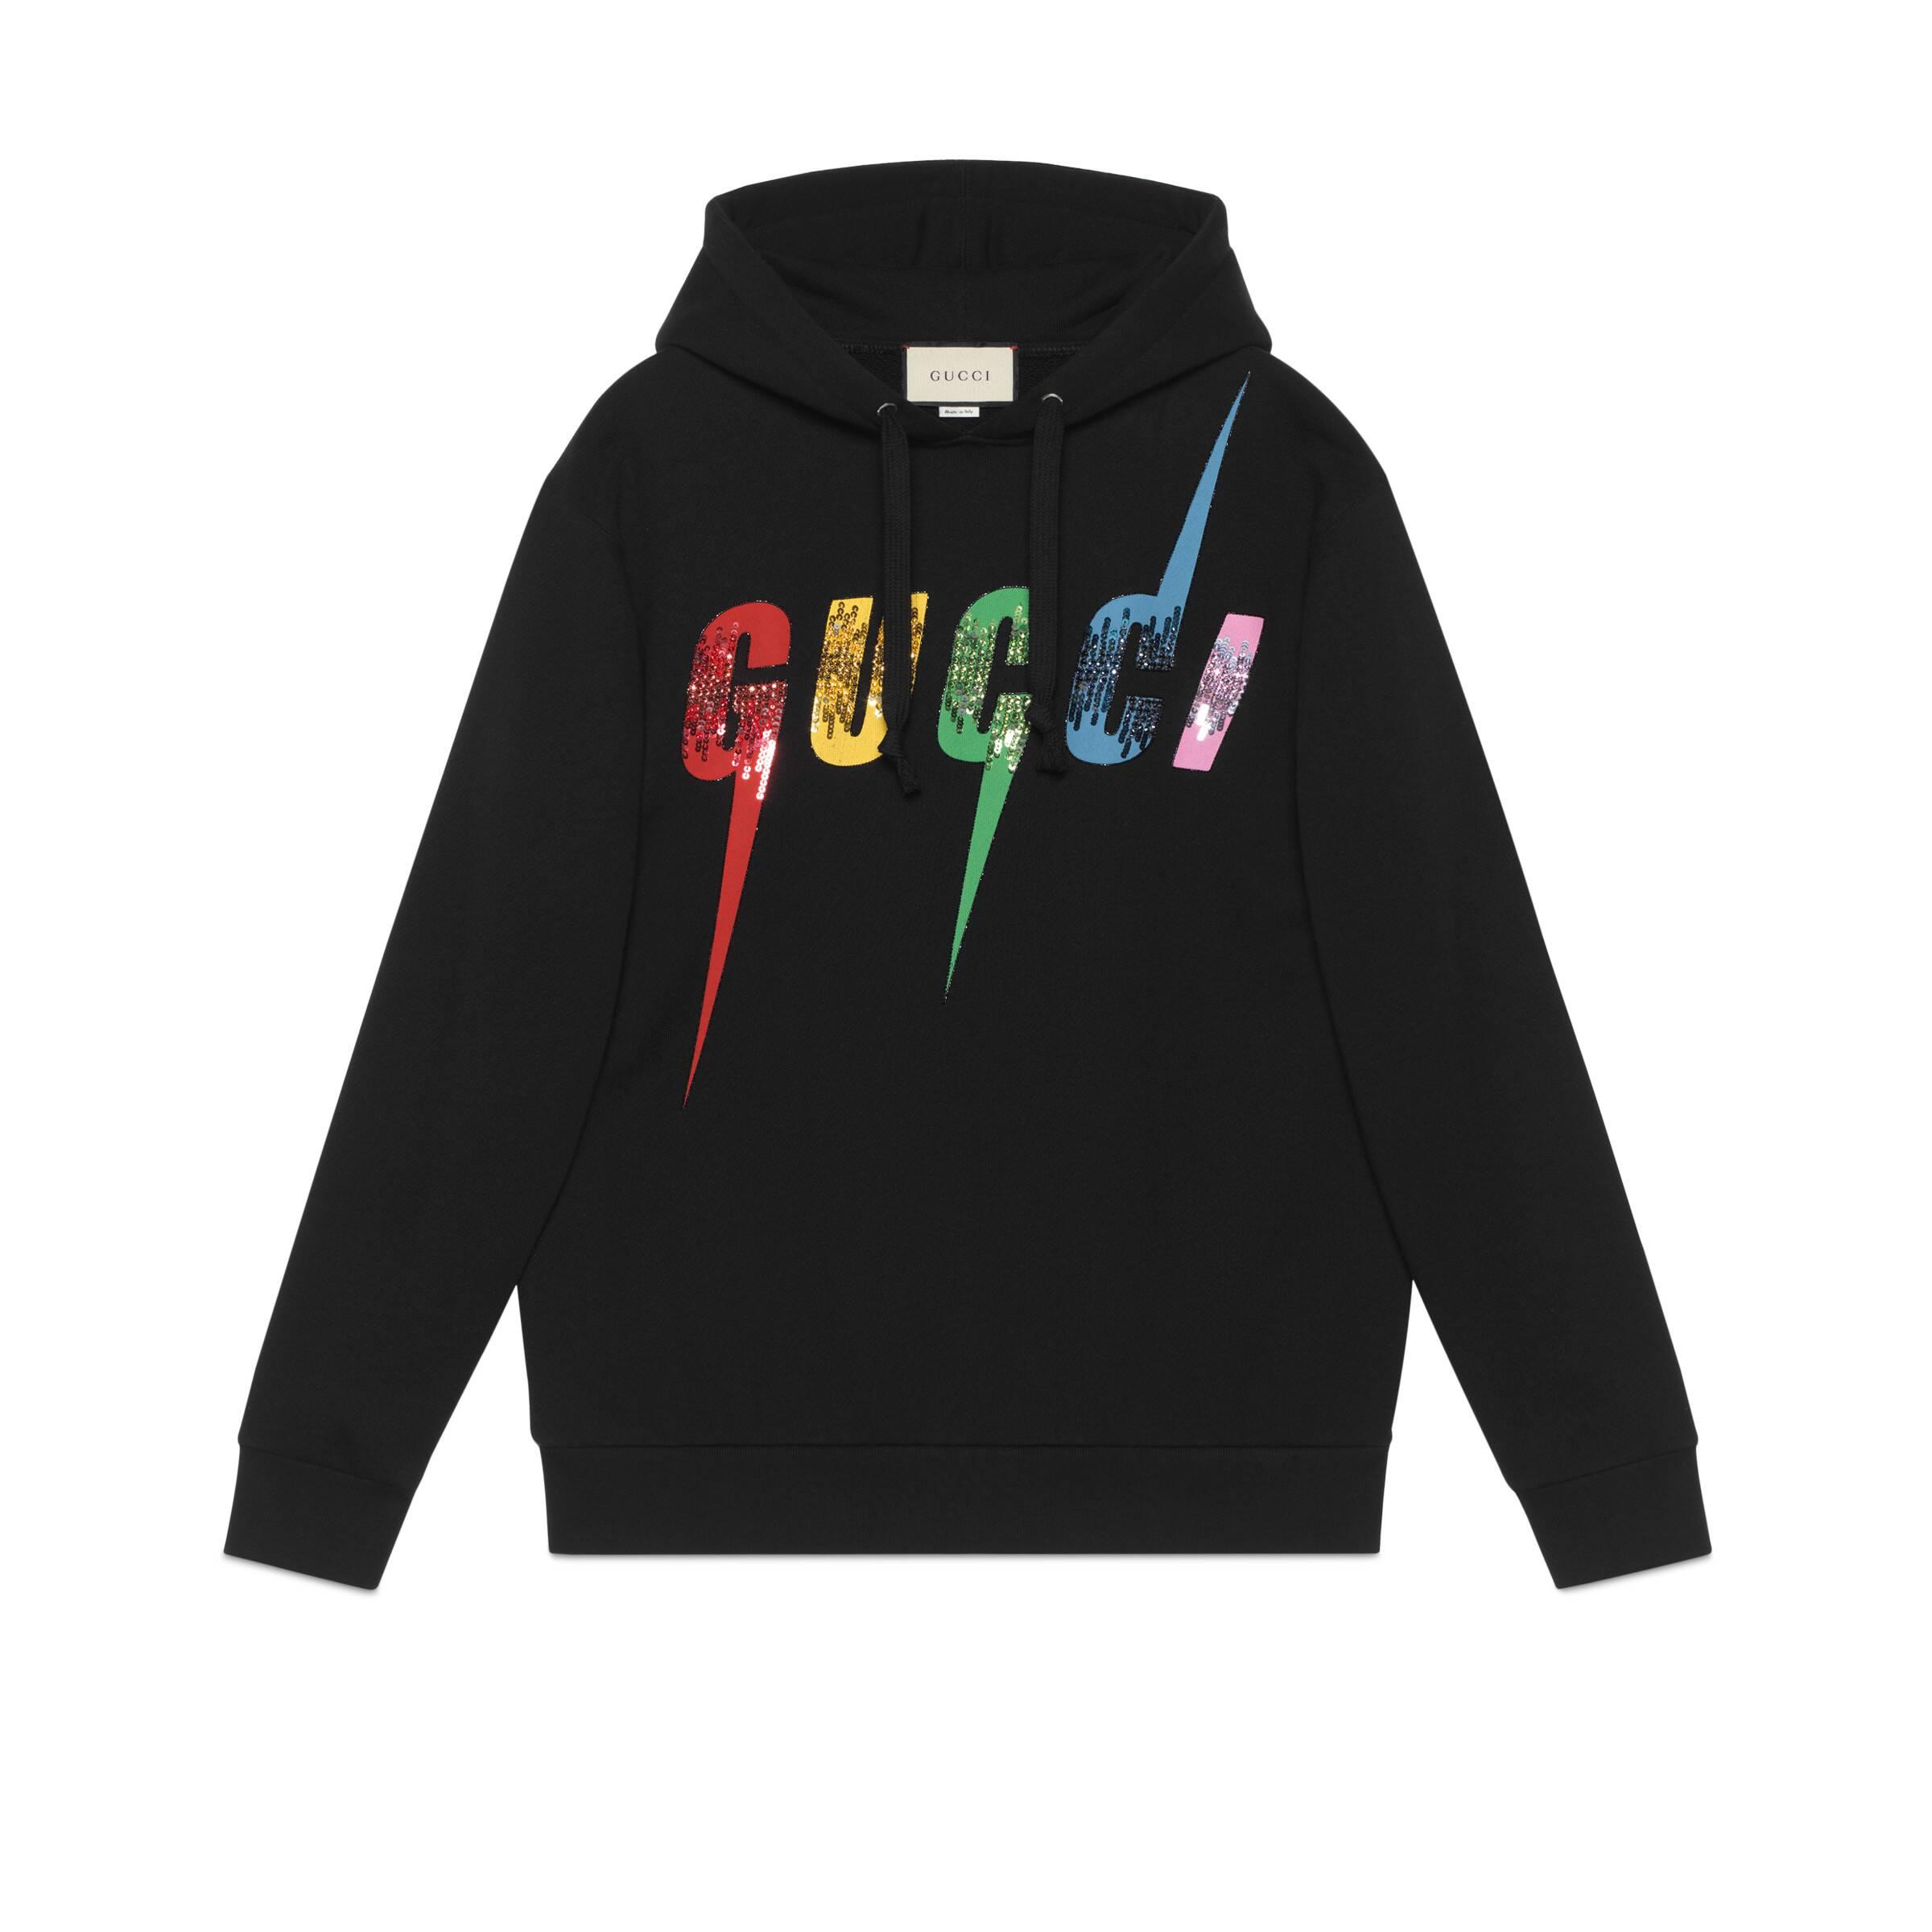 Gucci Cotton Oversize Sweatshirt With Blade in Black Pattern (Black) - Lyst